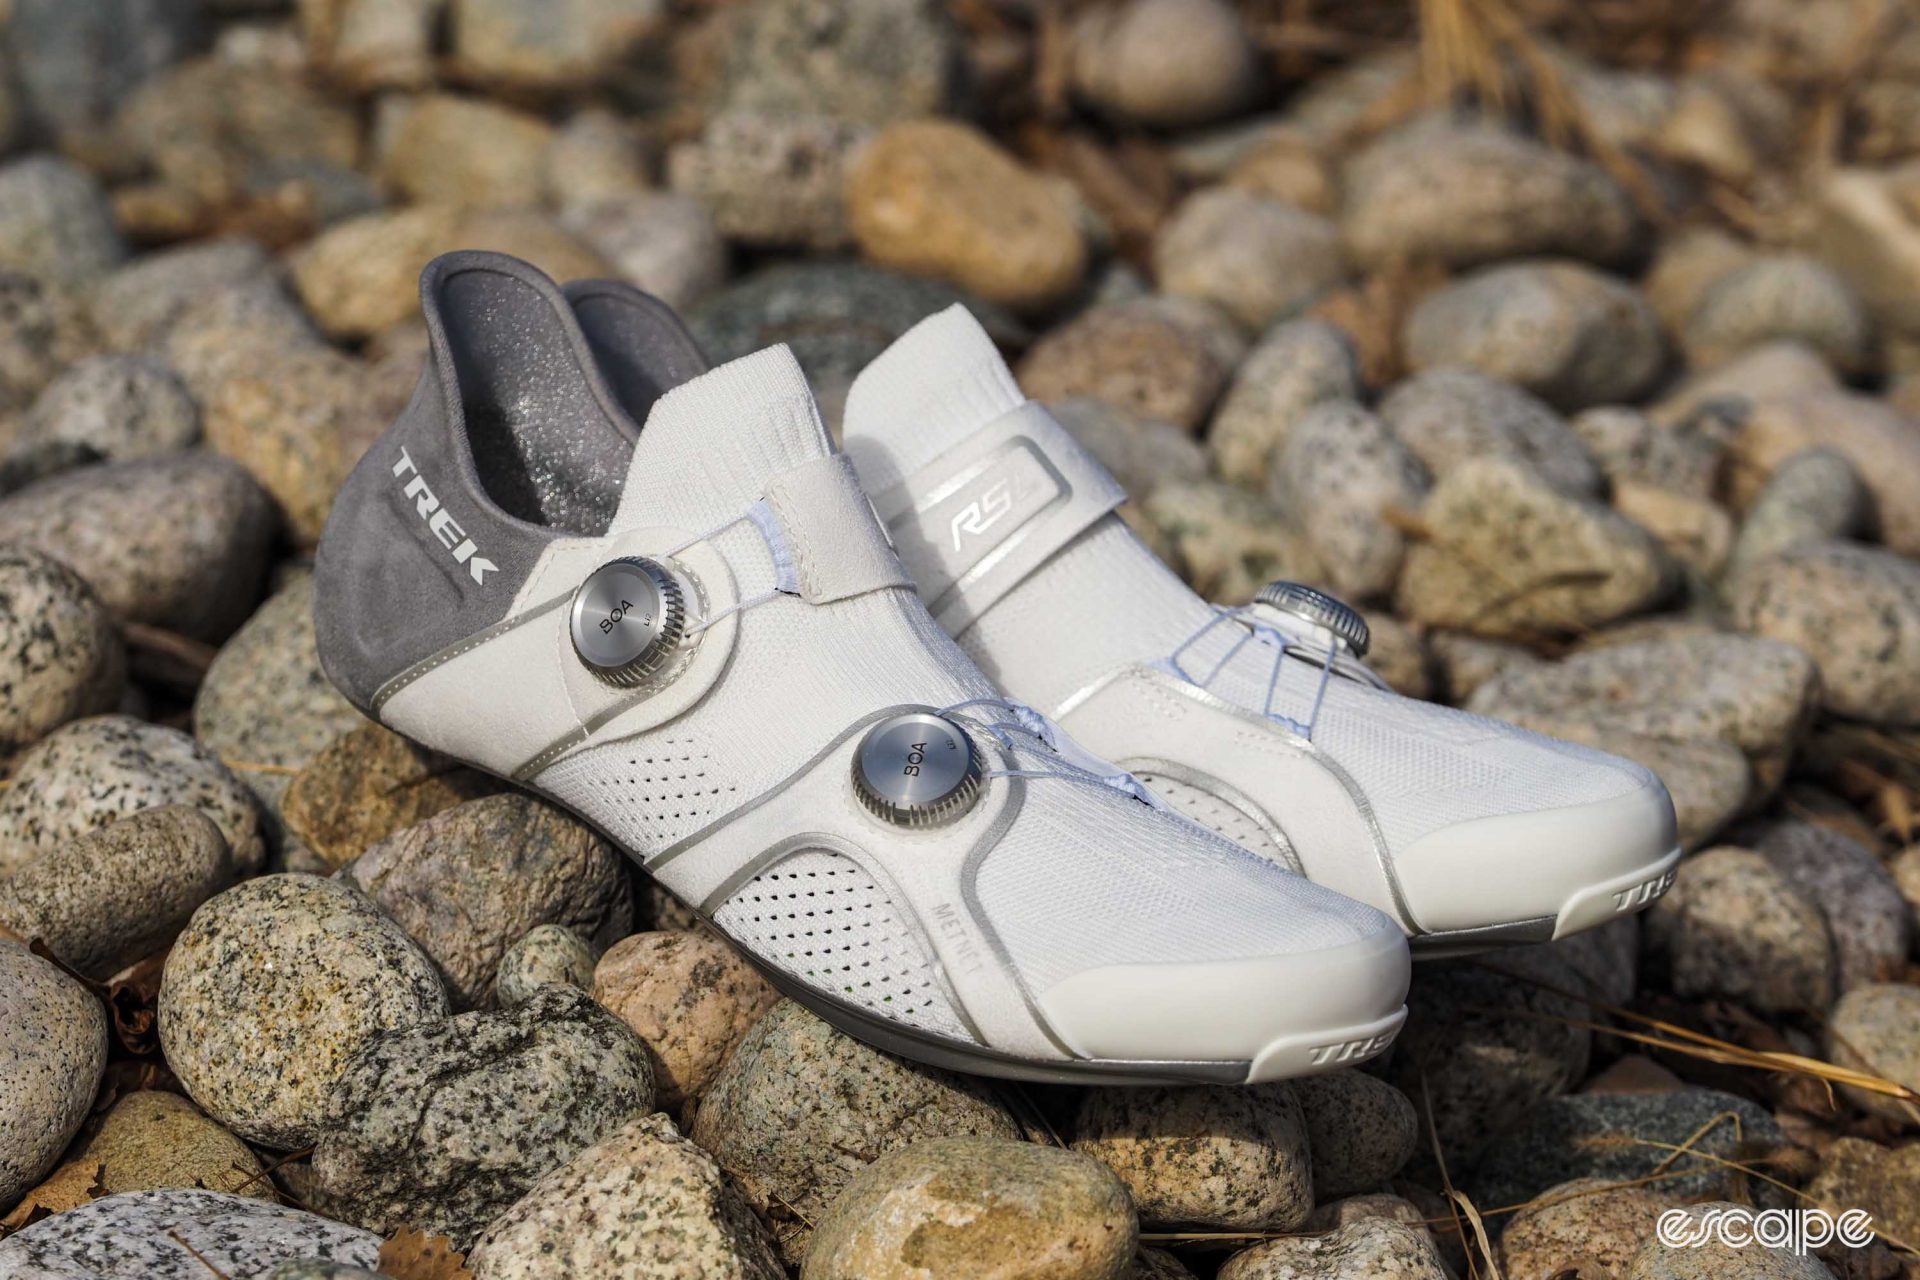 Trek RSL Knit shoe review: A custom fit from an off-the-shelf shoe 